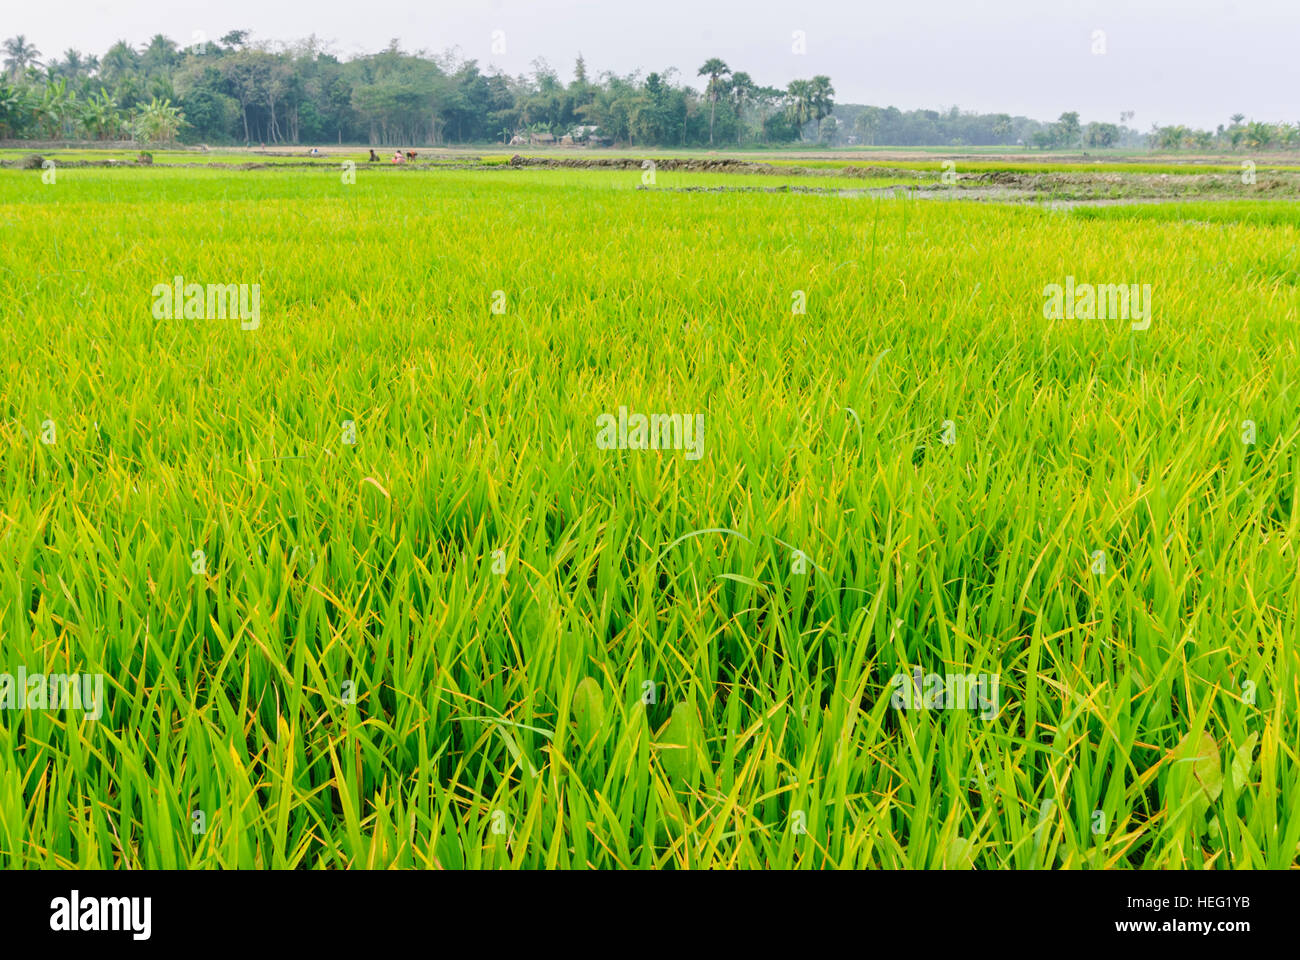 Hariargup: Rice fields field, Khulna Division, Bangladesh Stock Photo